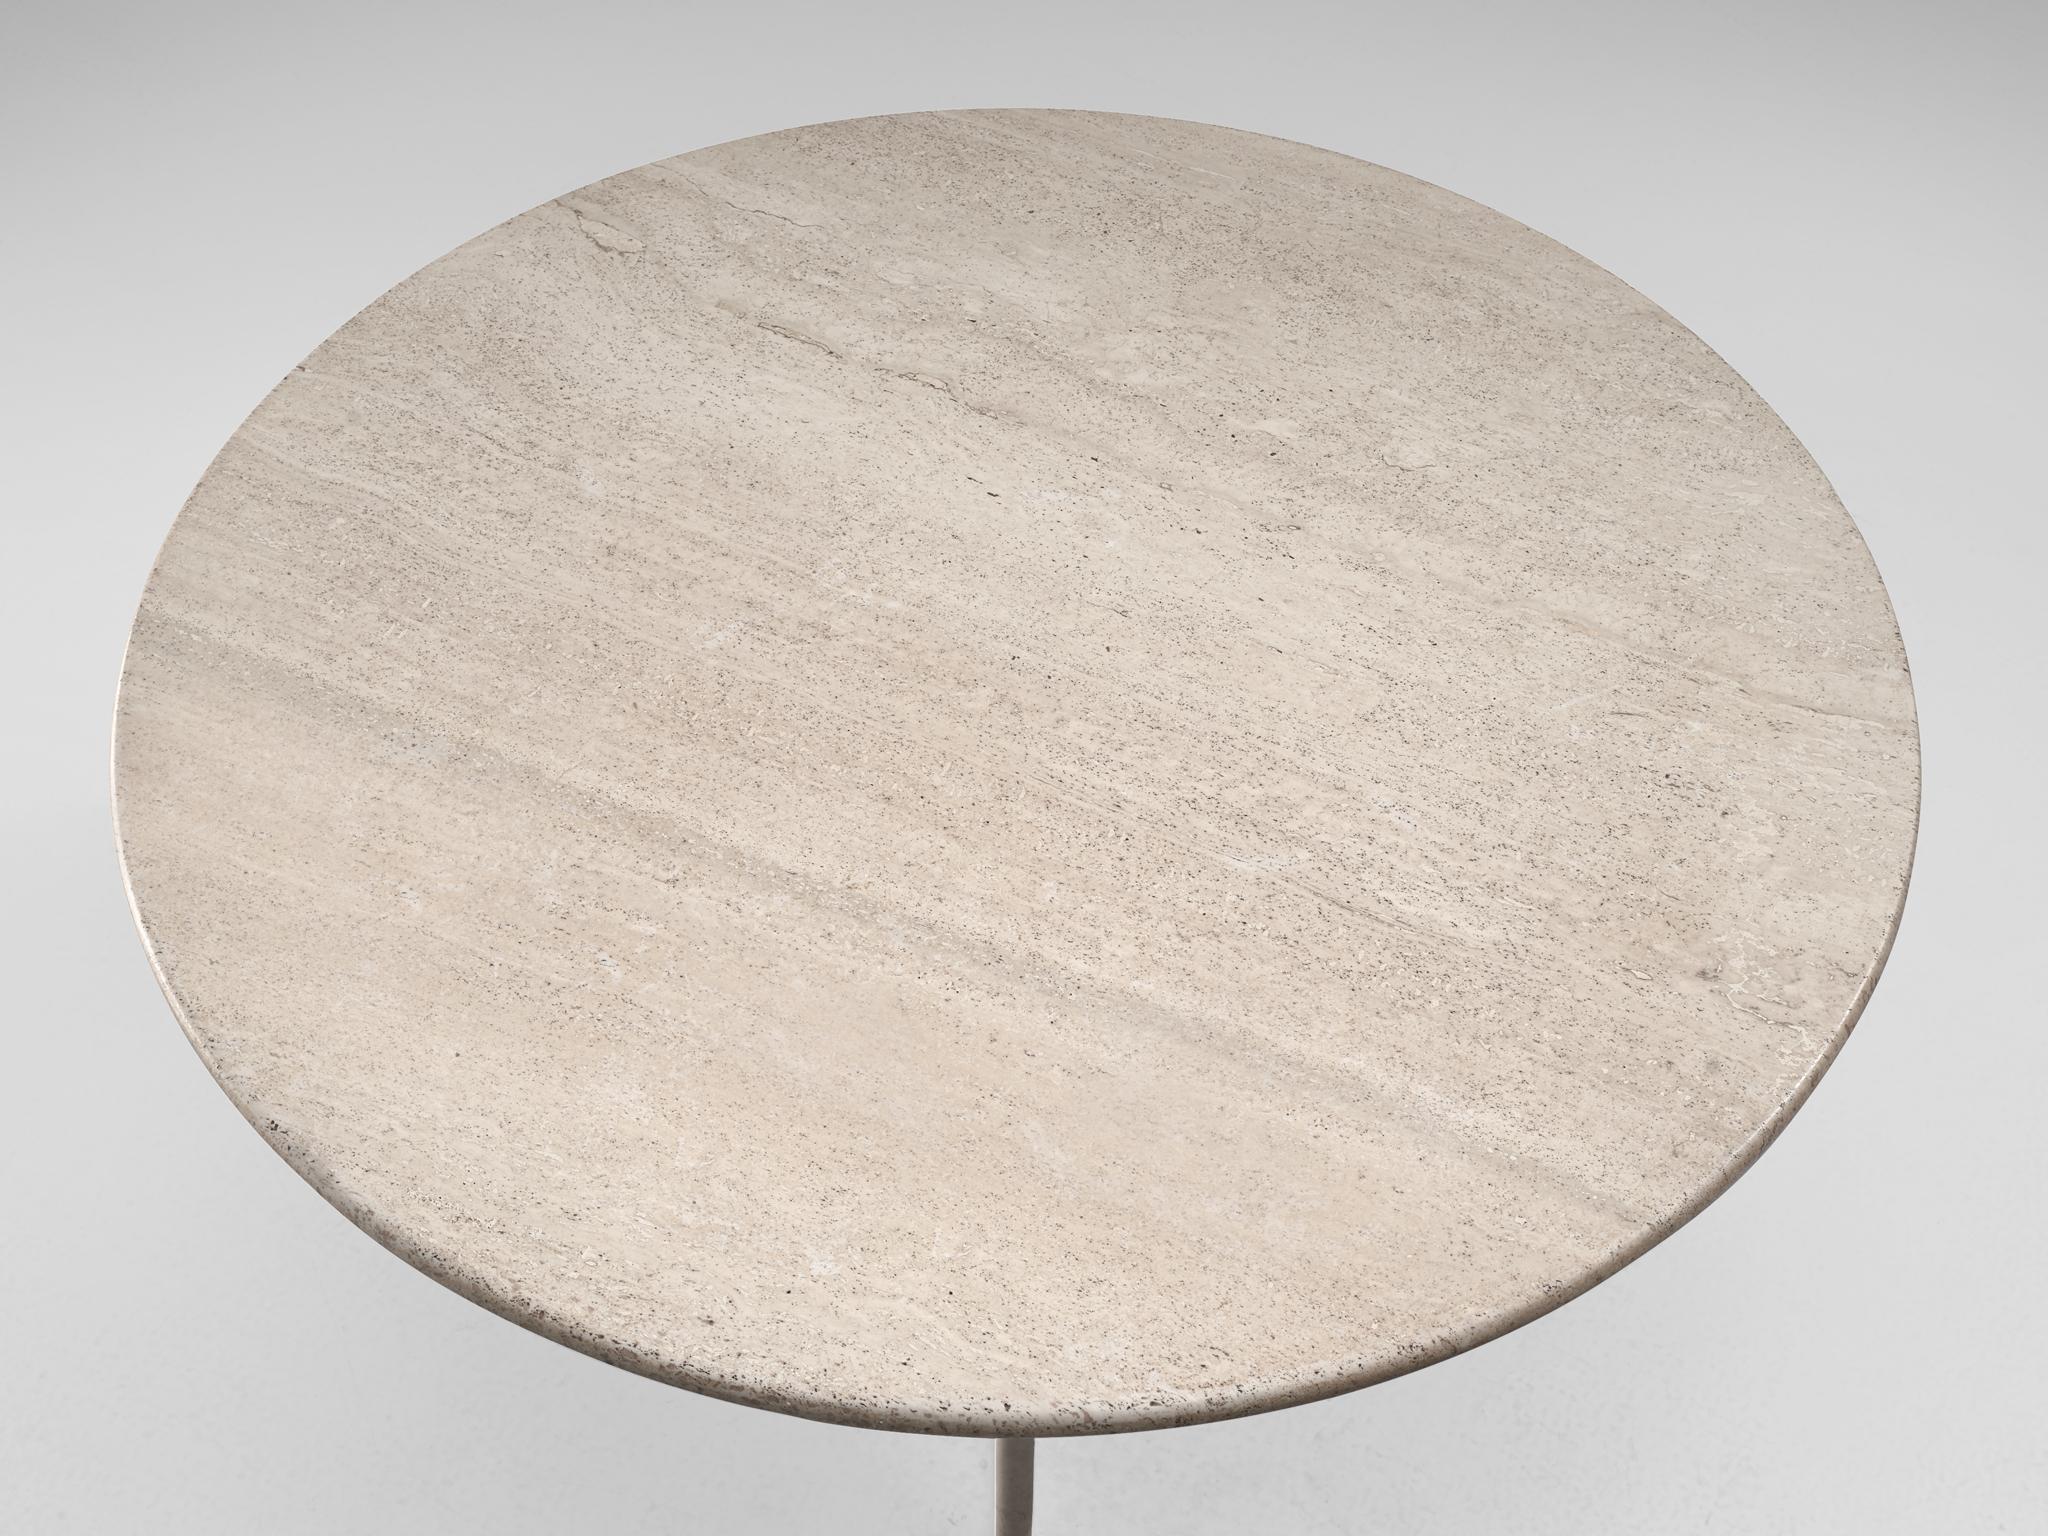 Post-Modern Round Travertine Pedestal Table with Triangular Shaped Base